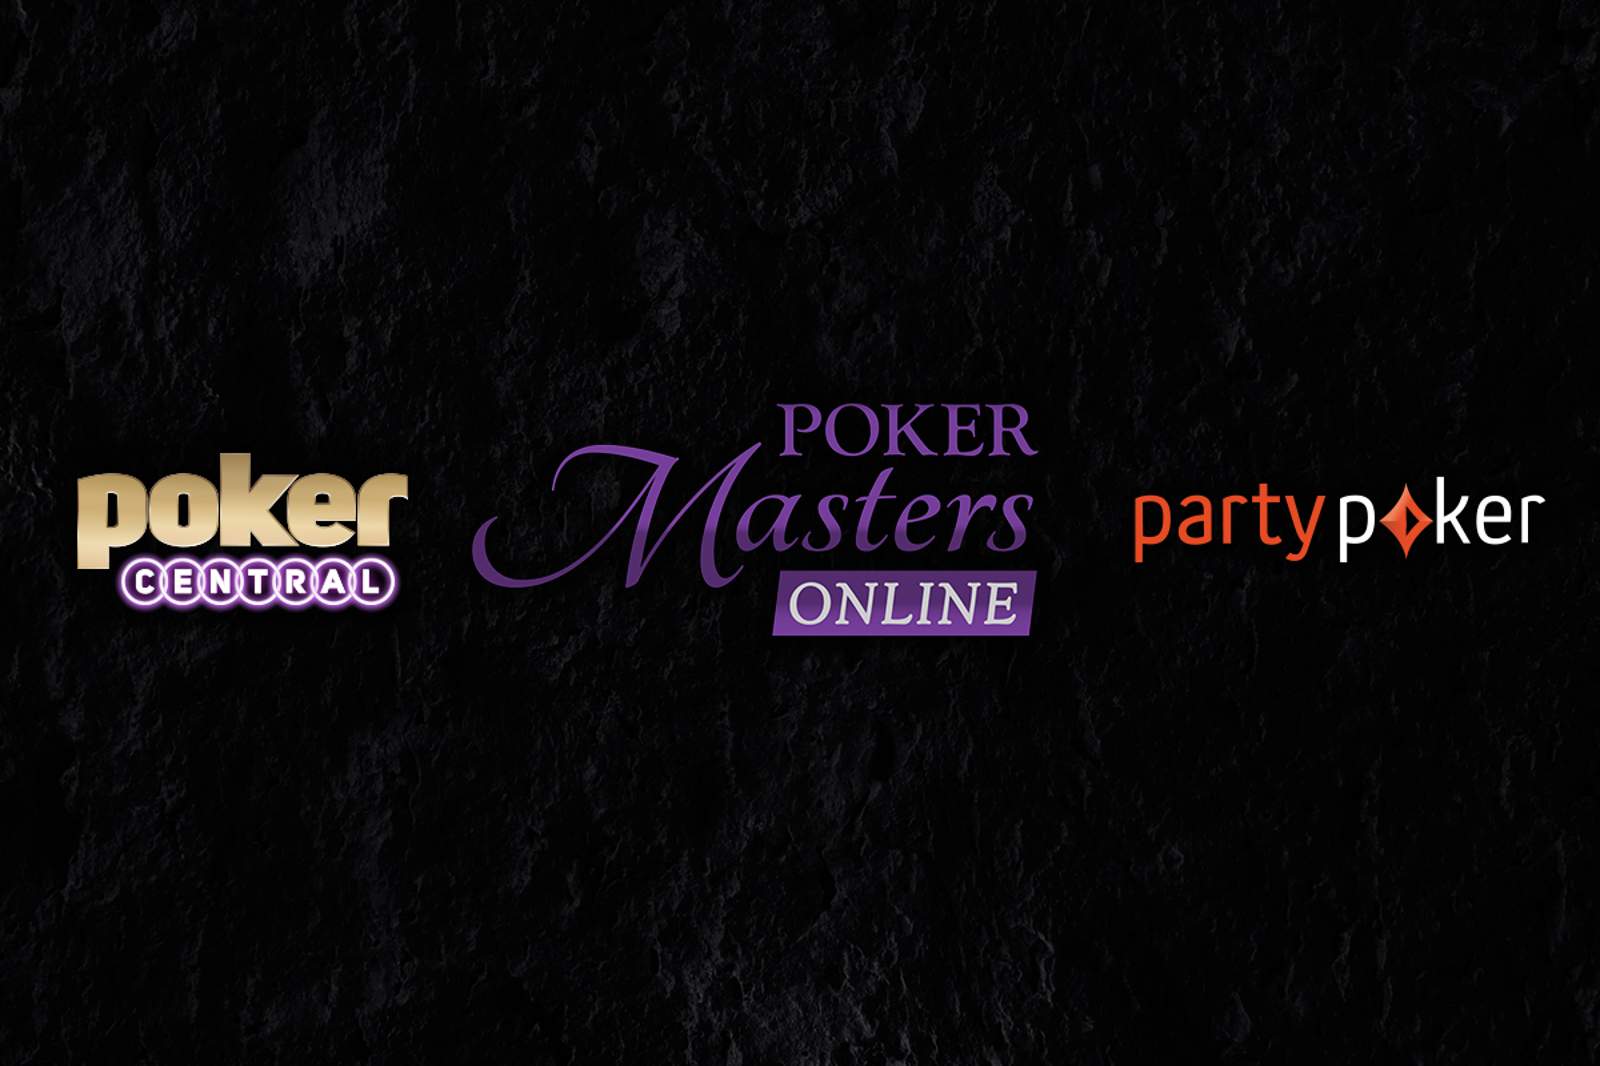 Poker Central & partypoker Announce Poker Masters Online - April 12-26